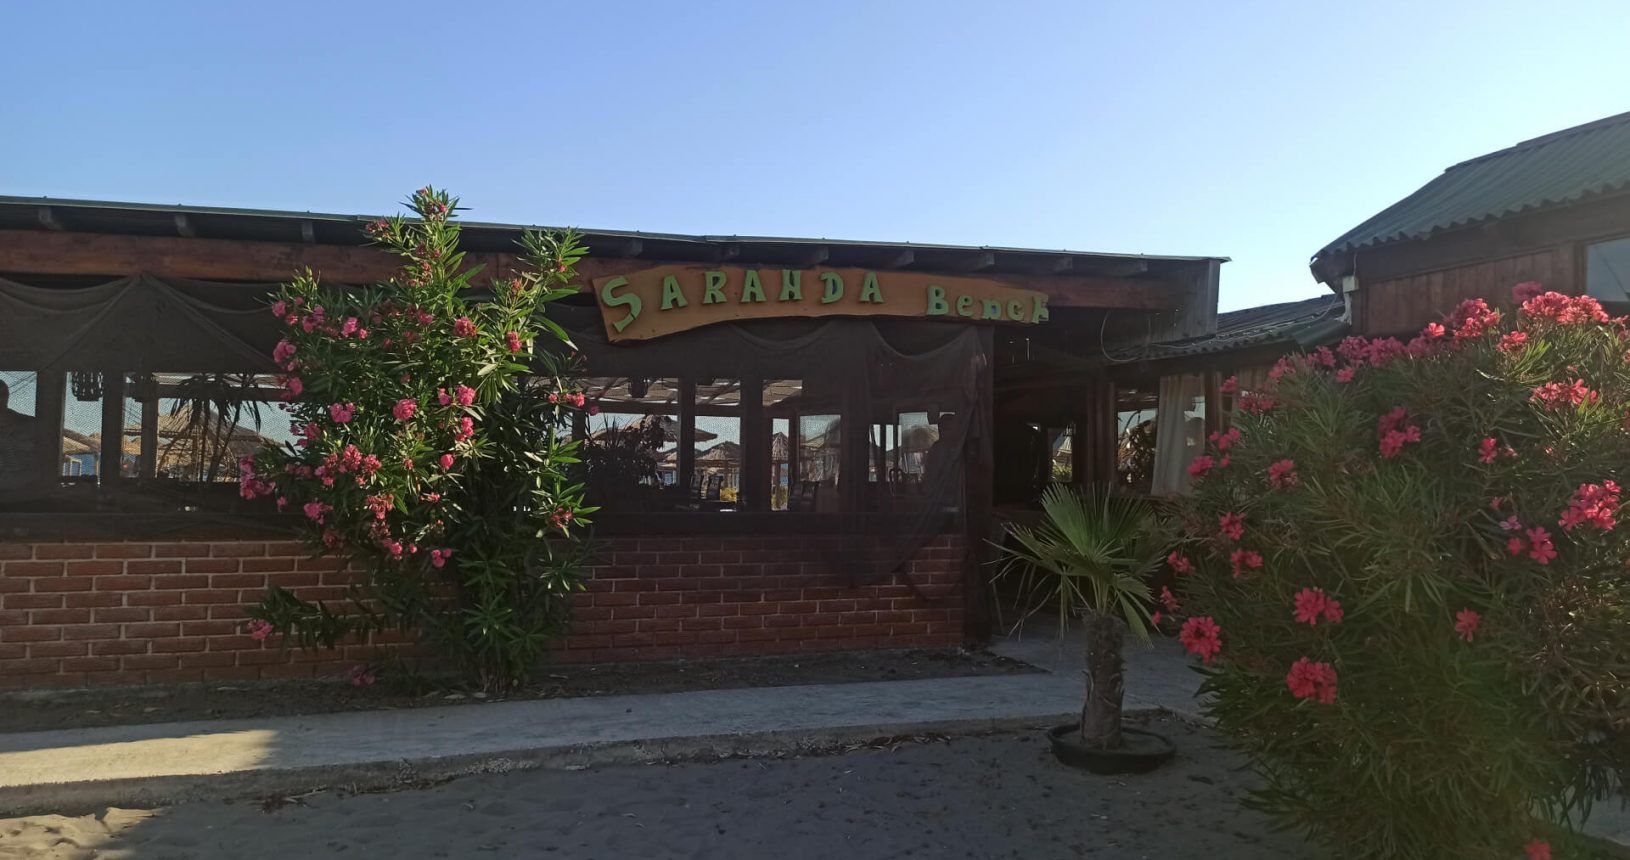 As Saranda Beach bar entrance